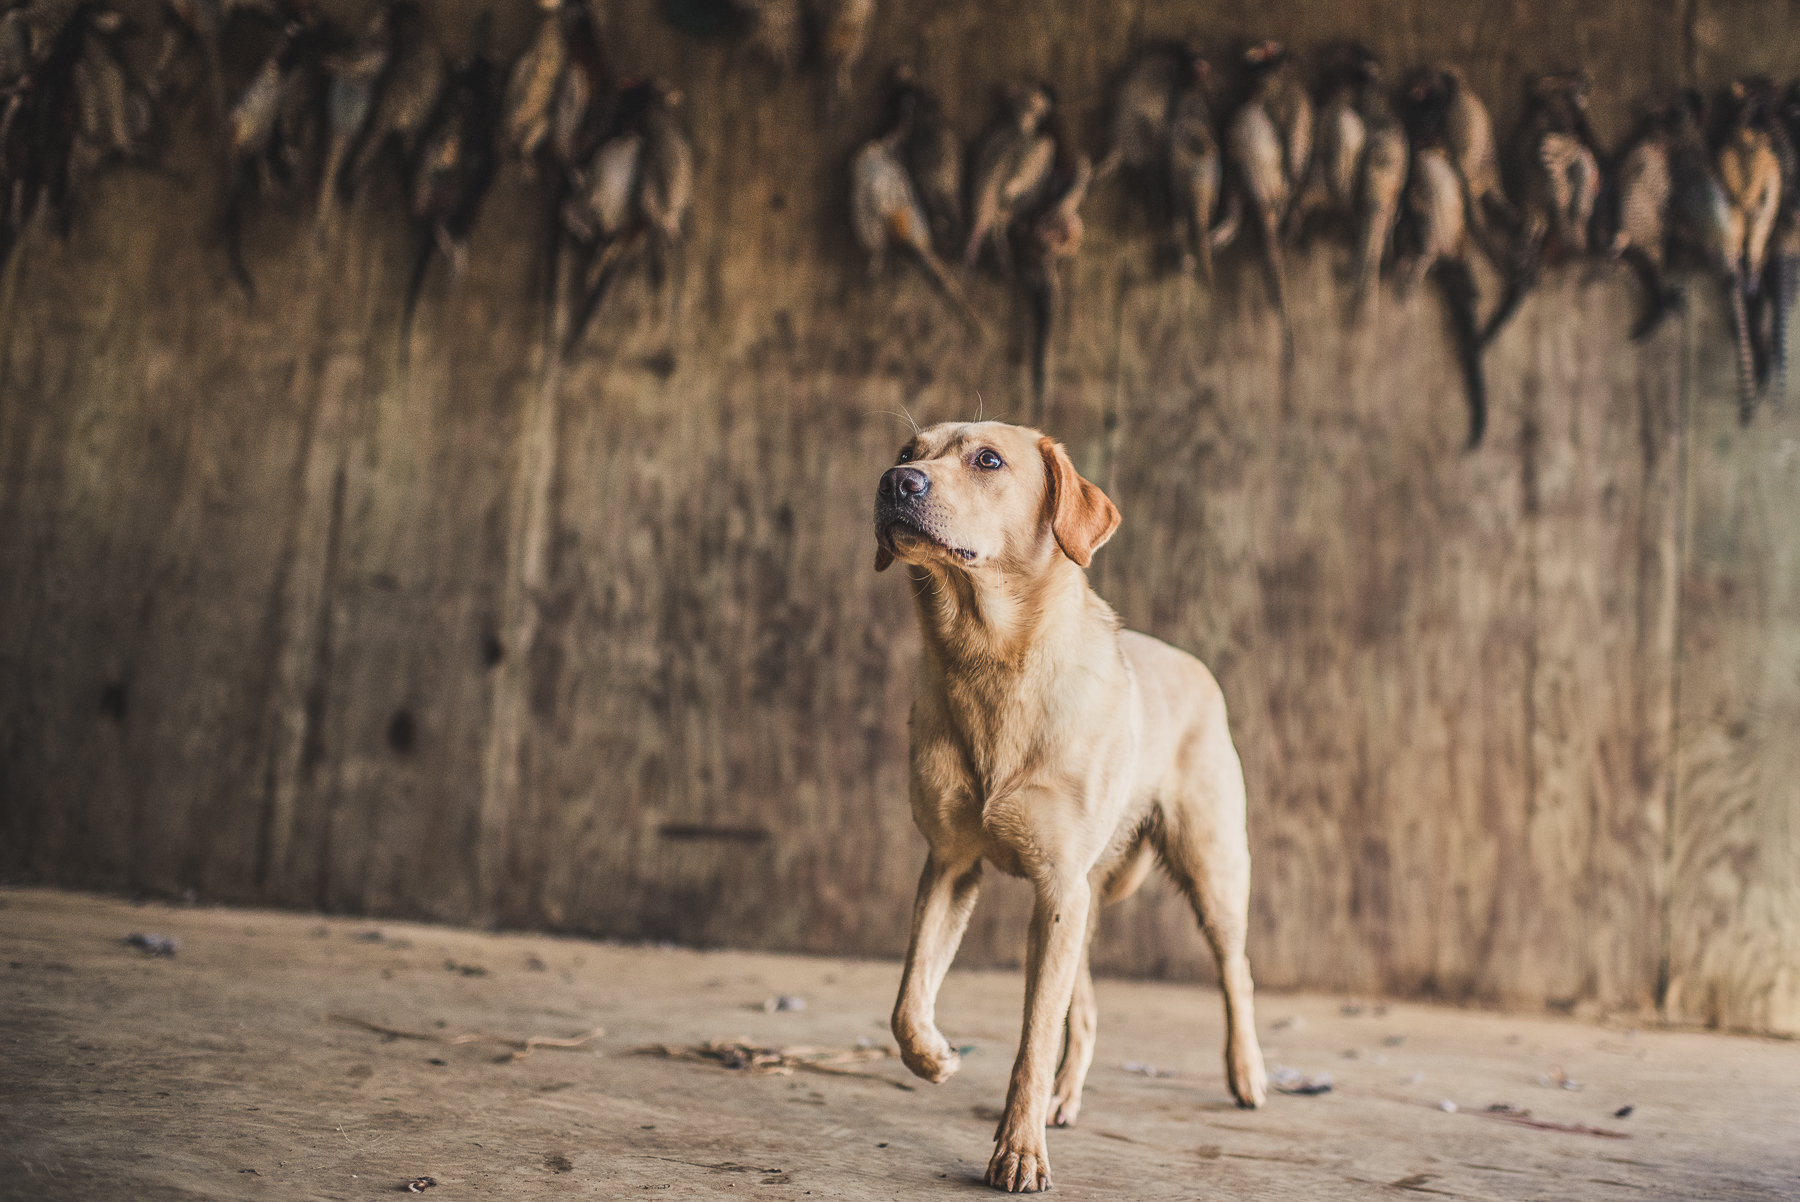 Yellow Labrador standing in barn under braces of pheasants